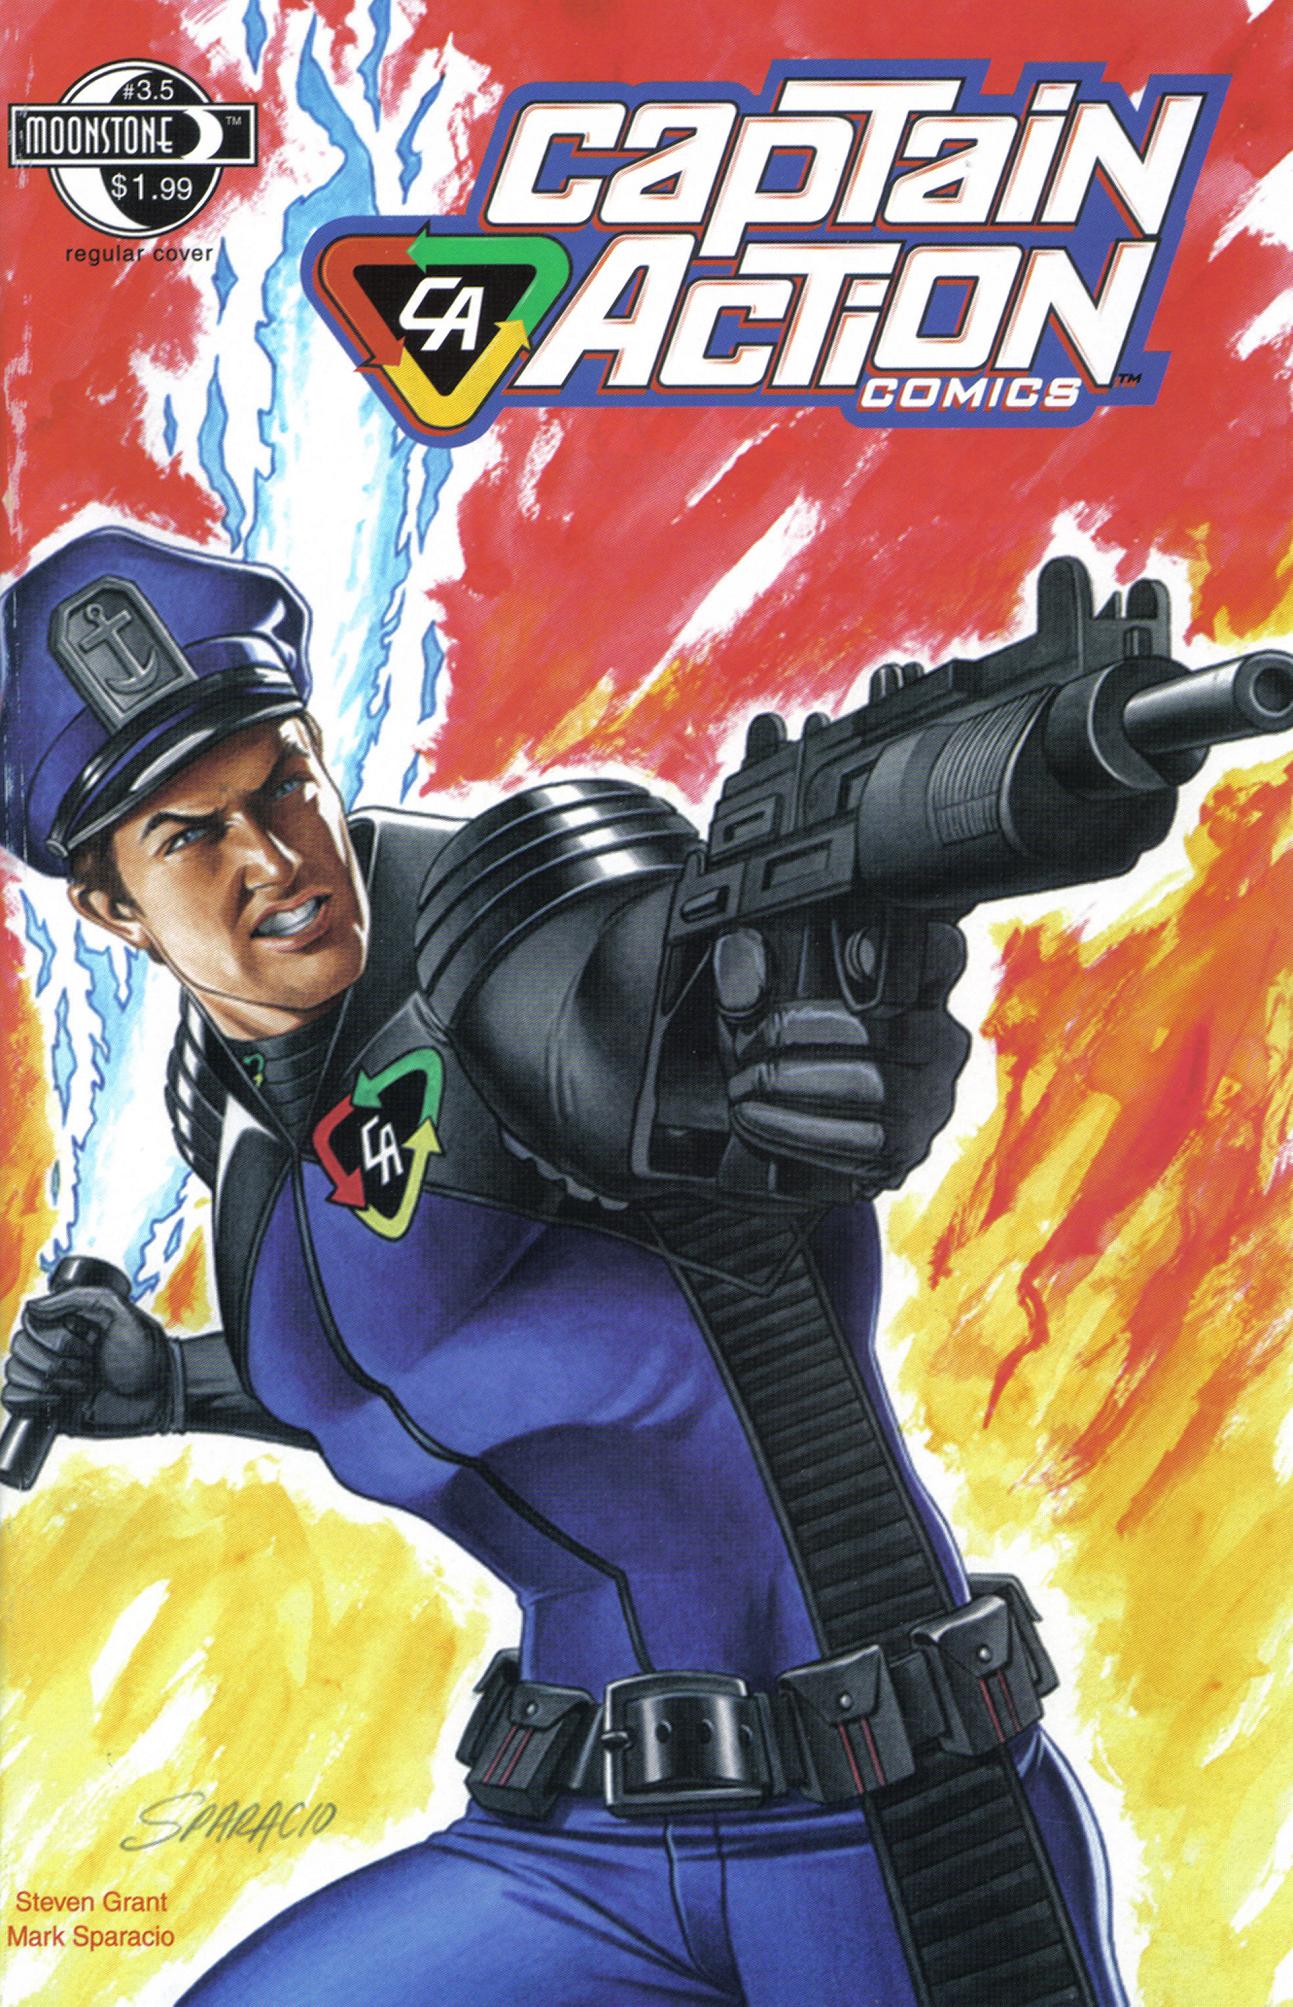 Read online Captain Action Comics comic -  Issue #3.5 - 1